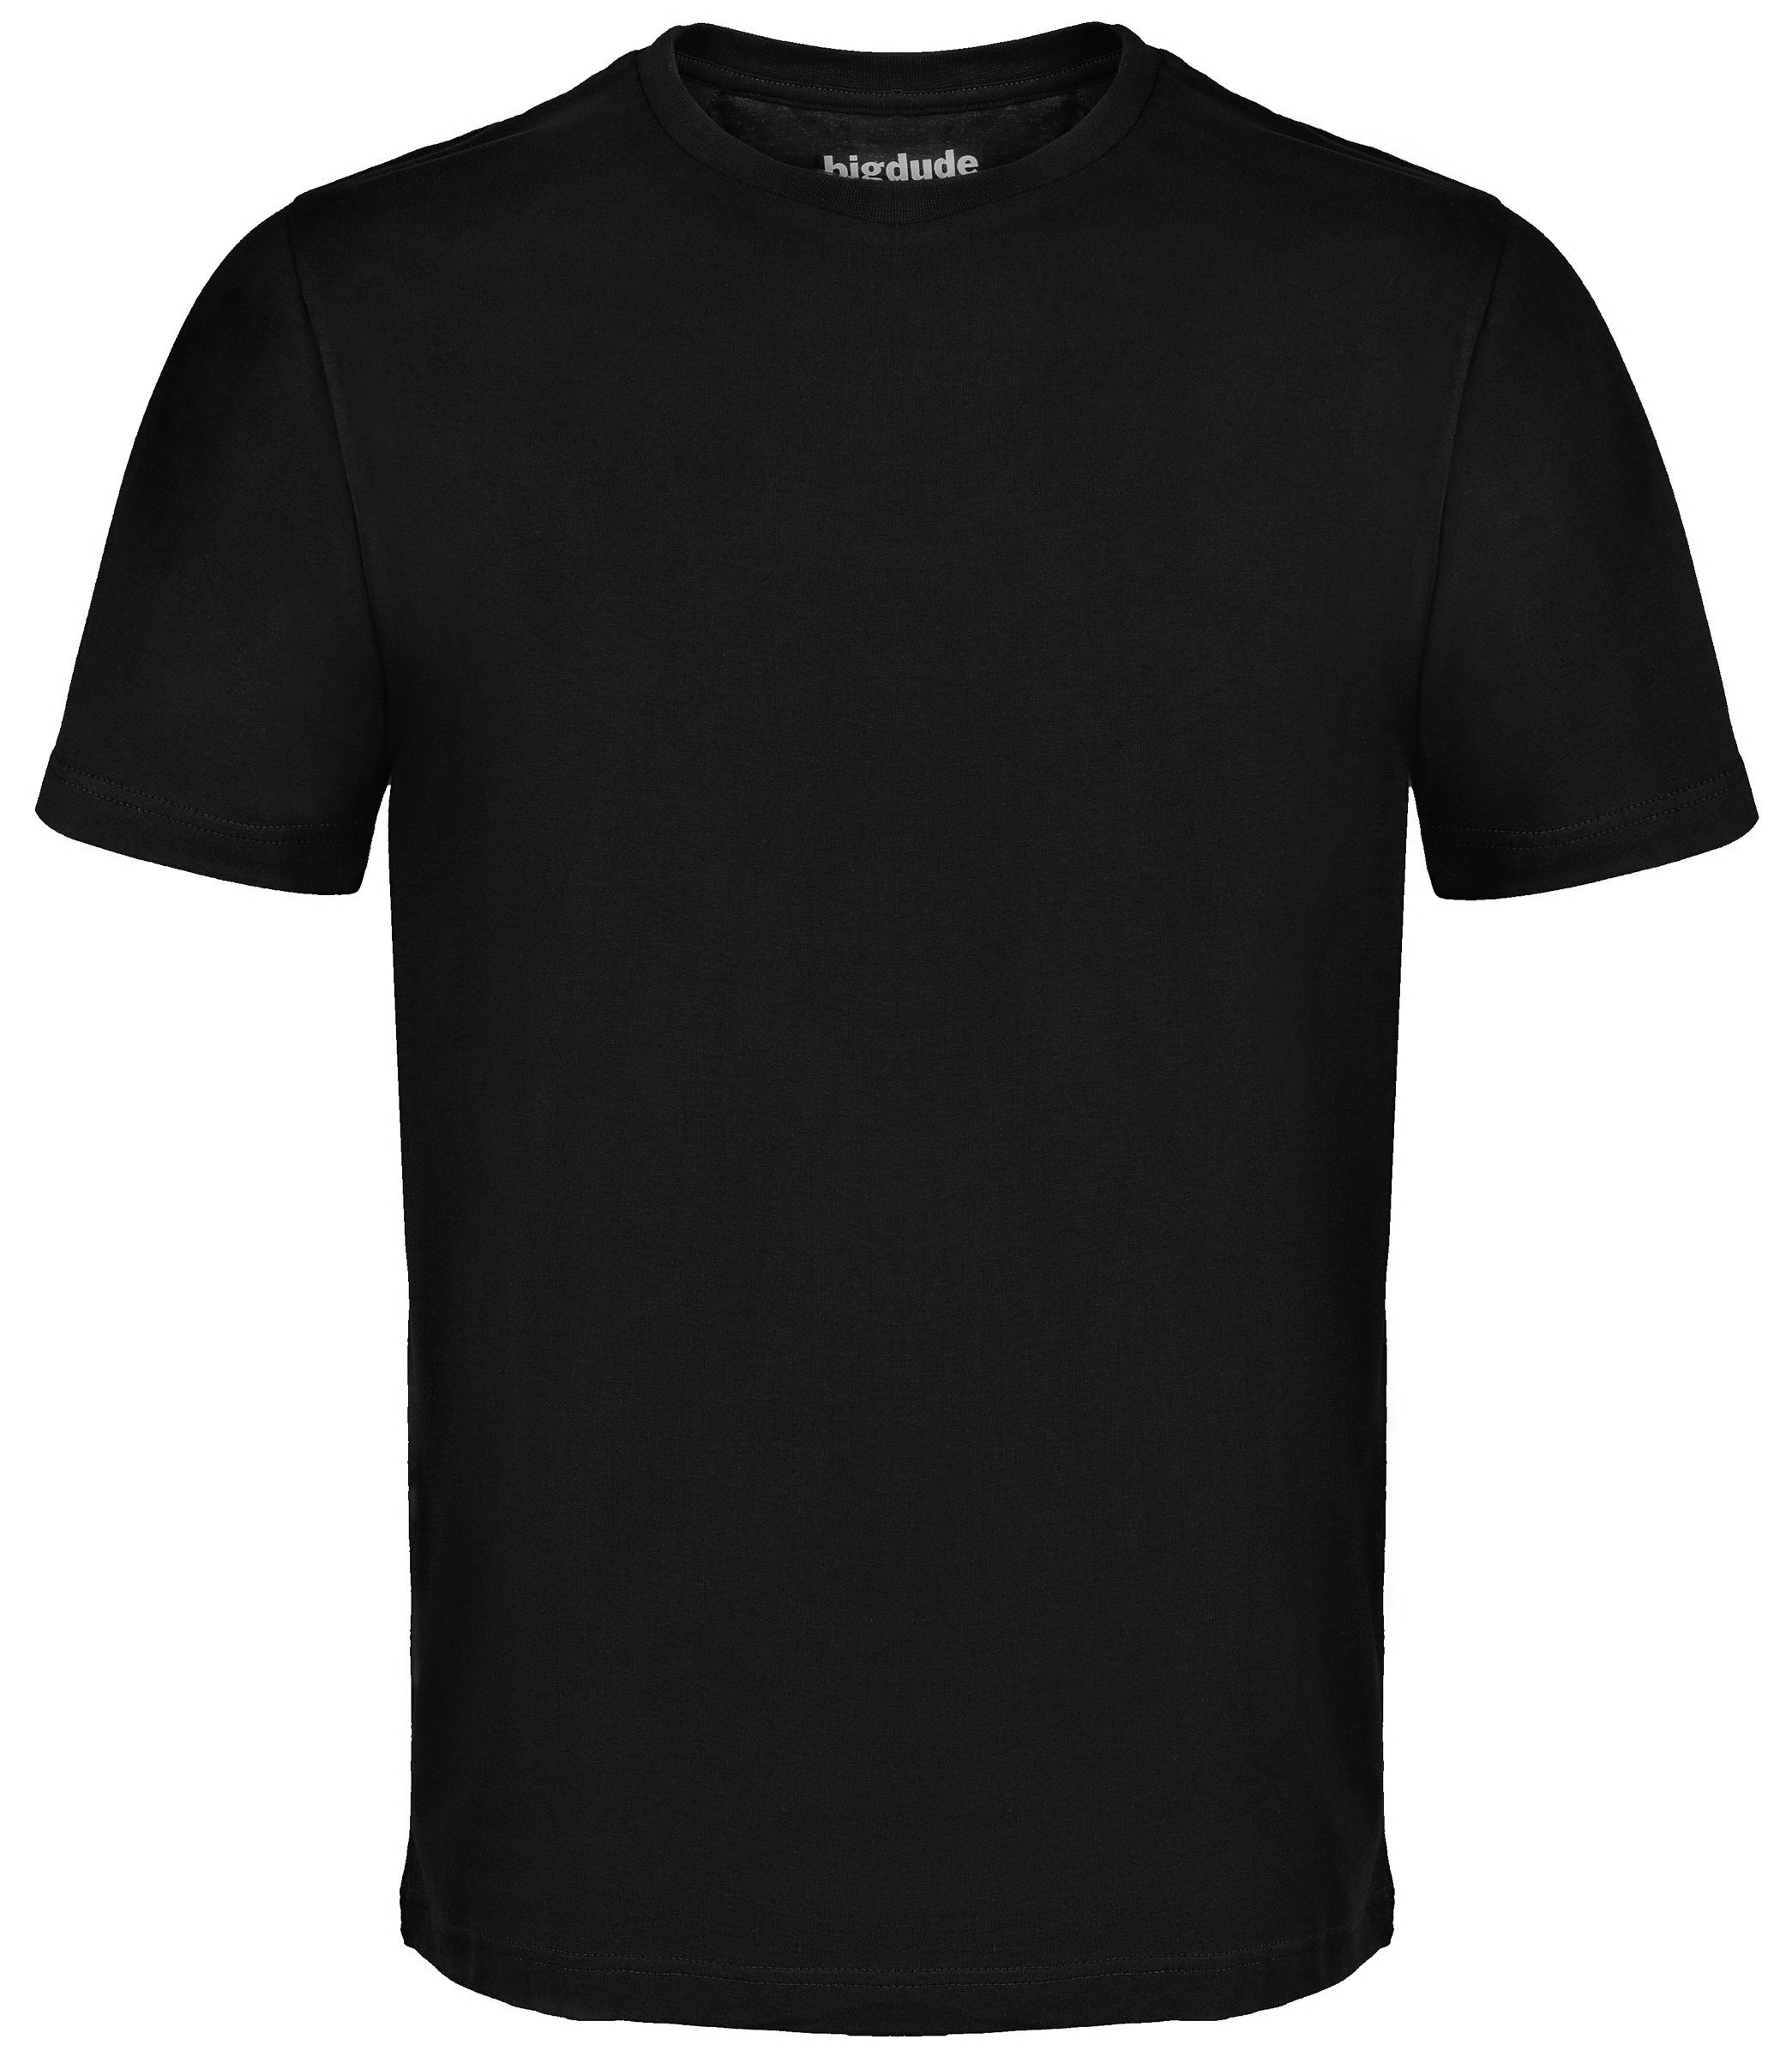 Bigdude Plain Crew Neck T-Shirt Black | BigDude